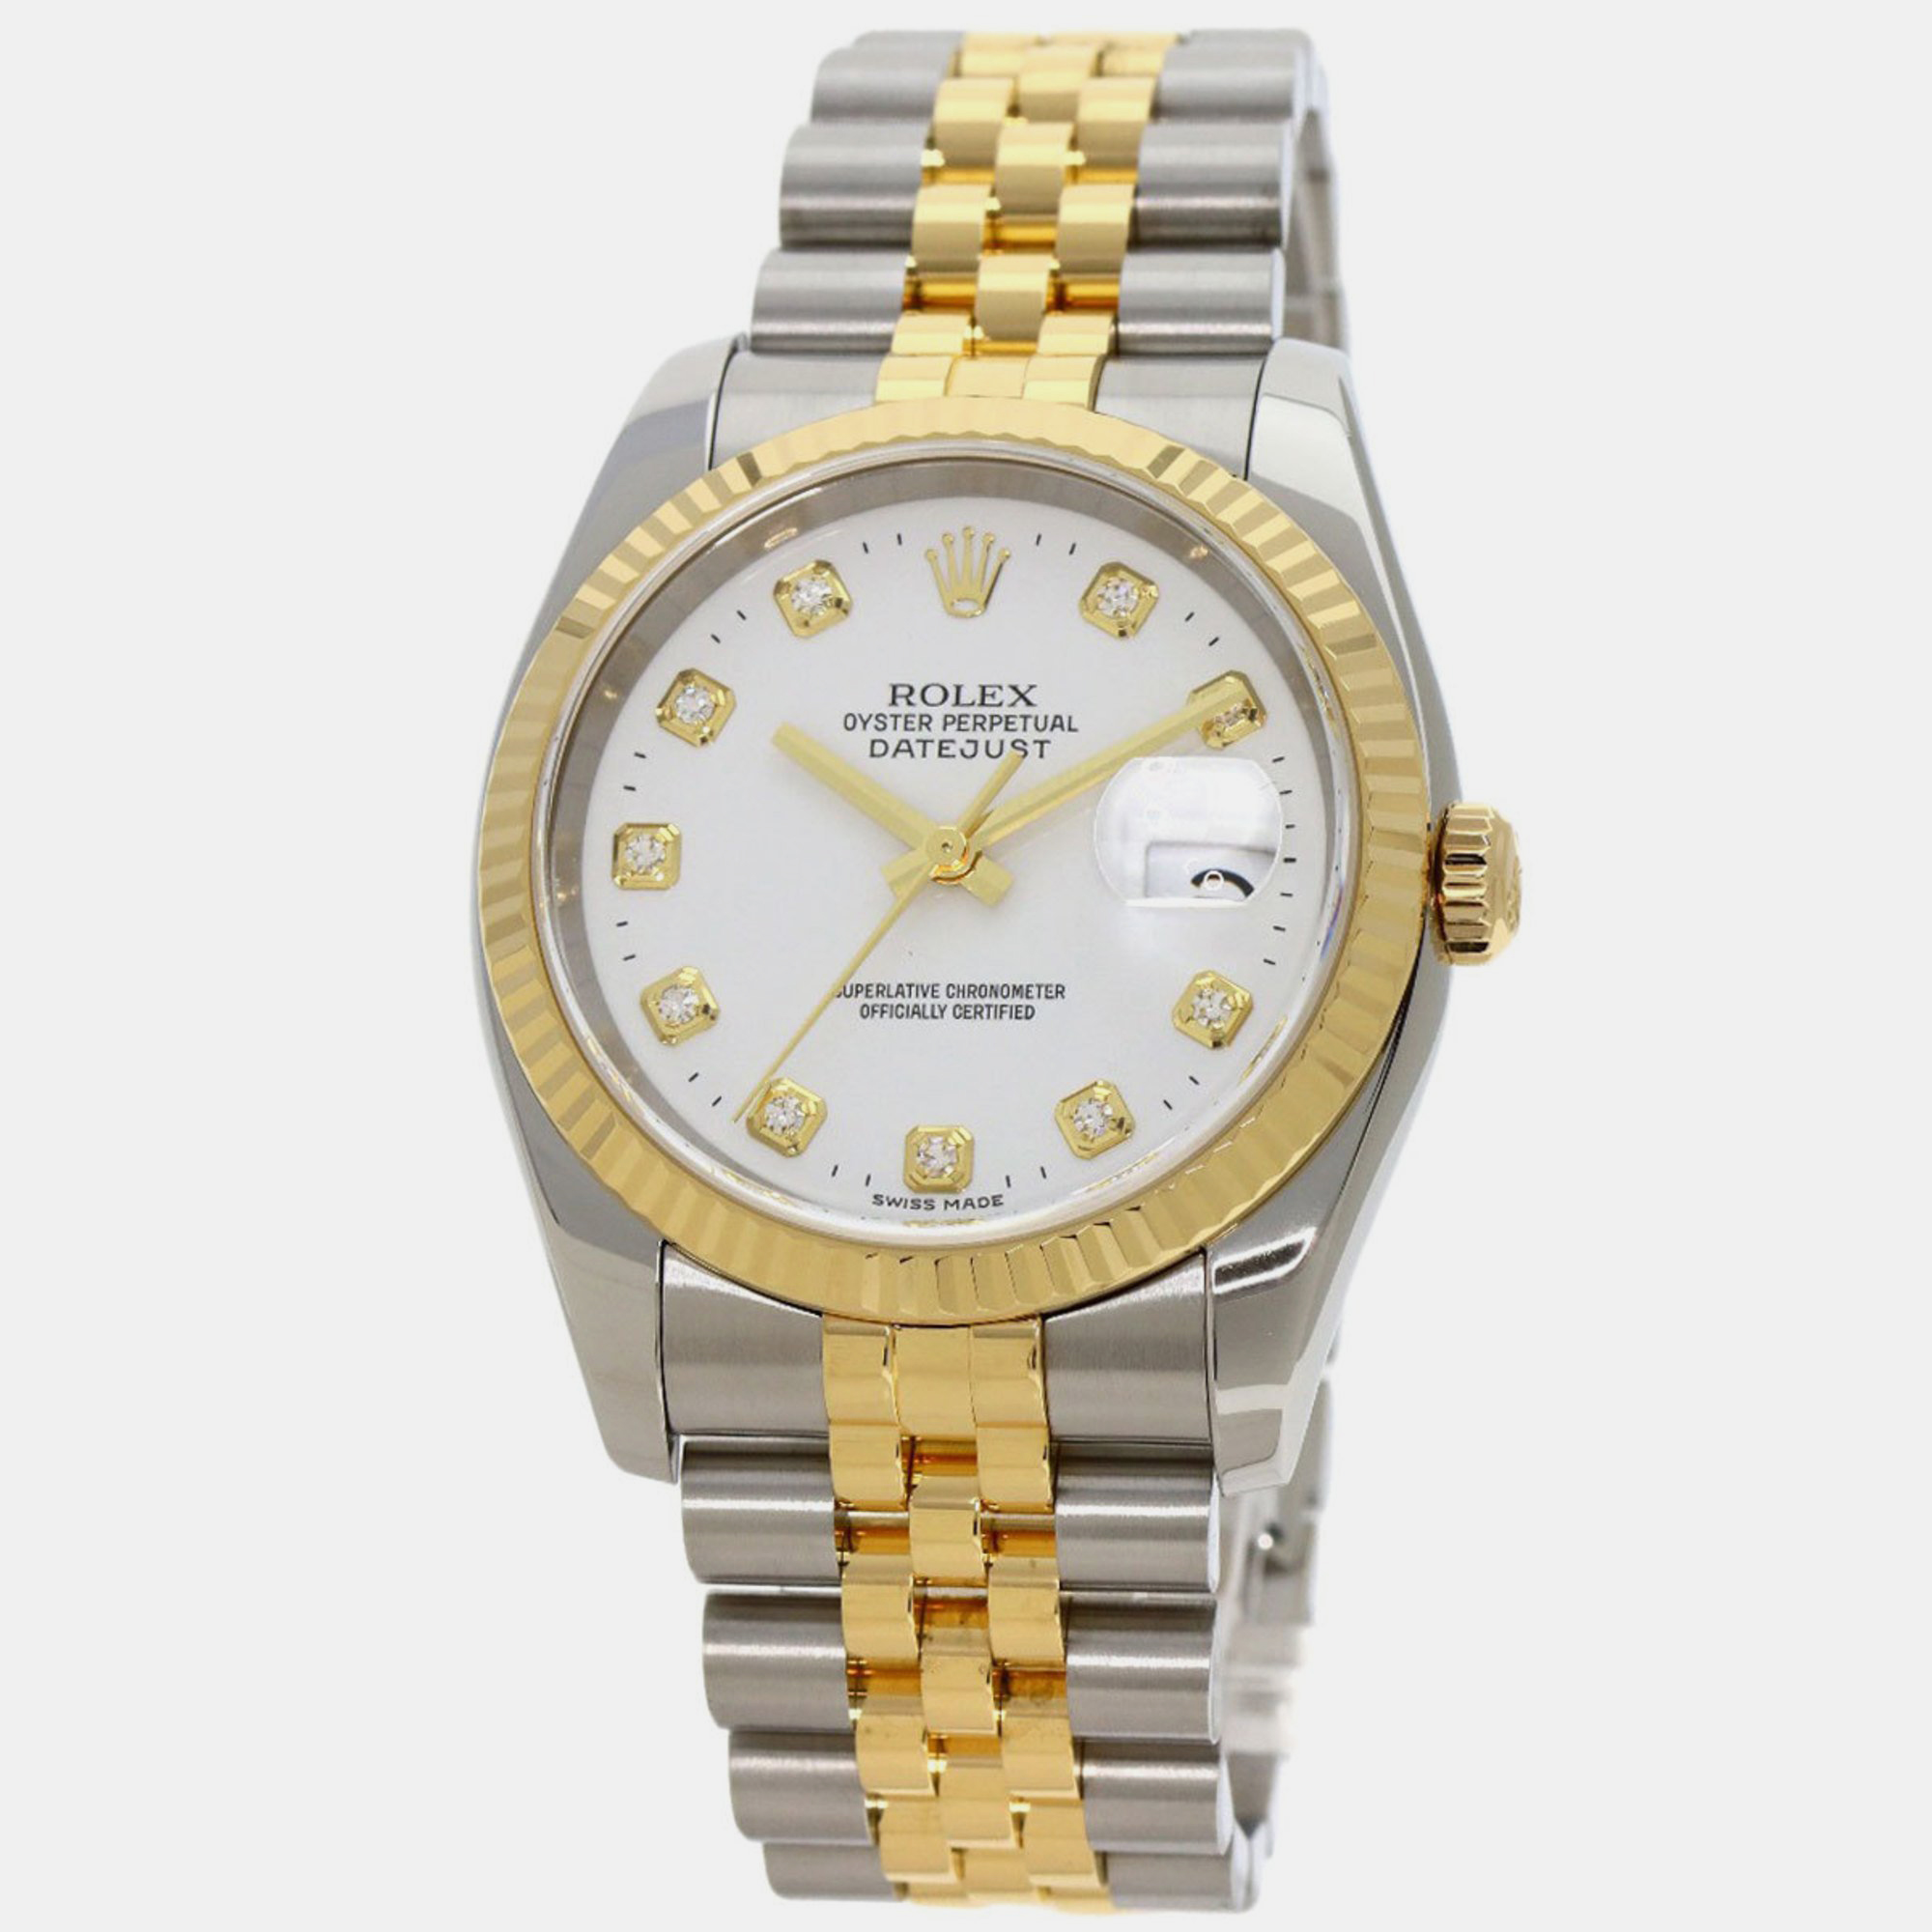 Rolex white 18k yellow gold stainless steel diamond 116233 datejust automatic men's wristwatch 36 mm